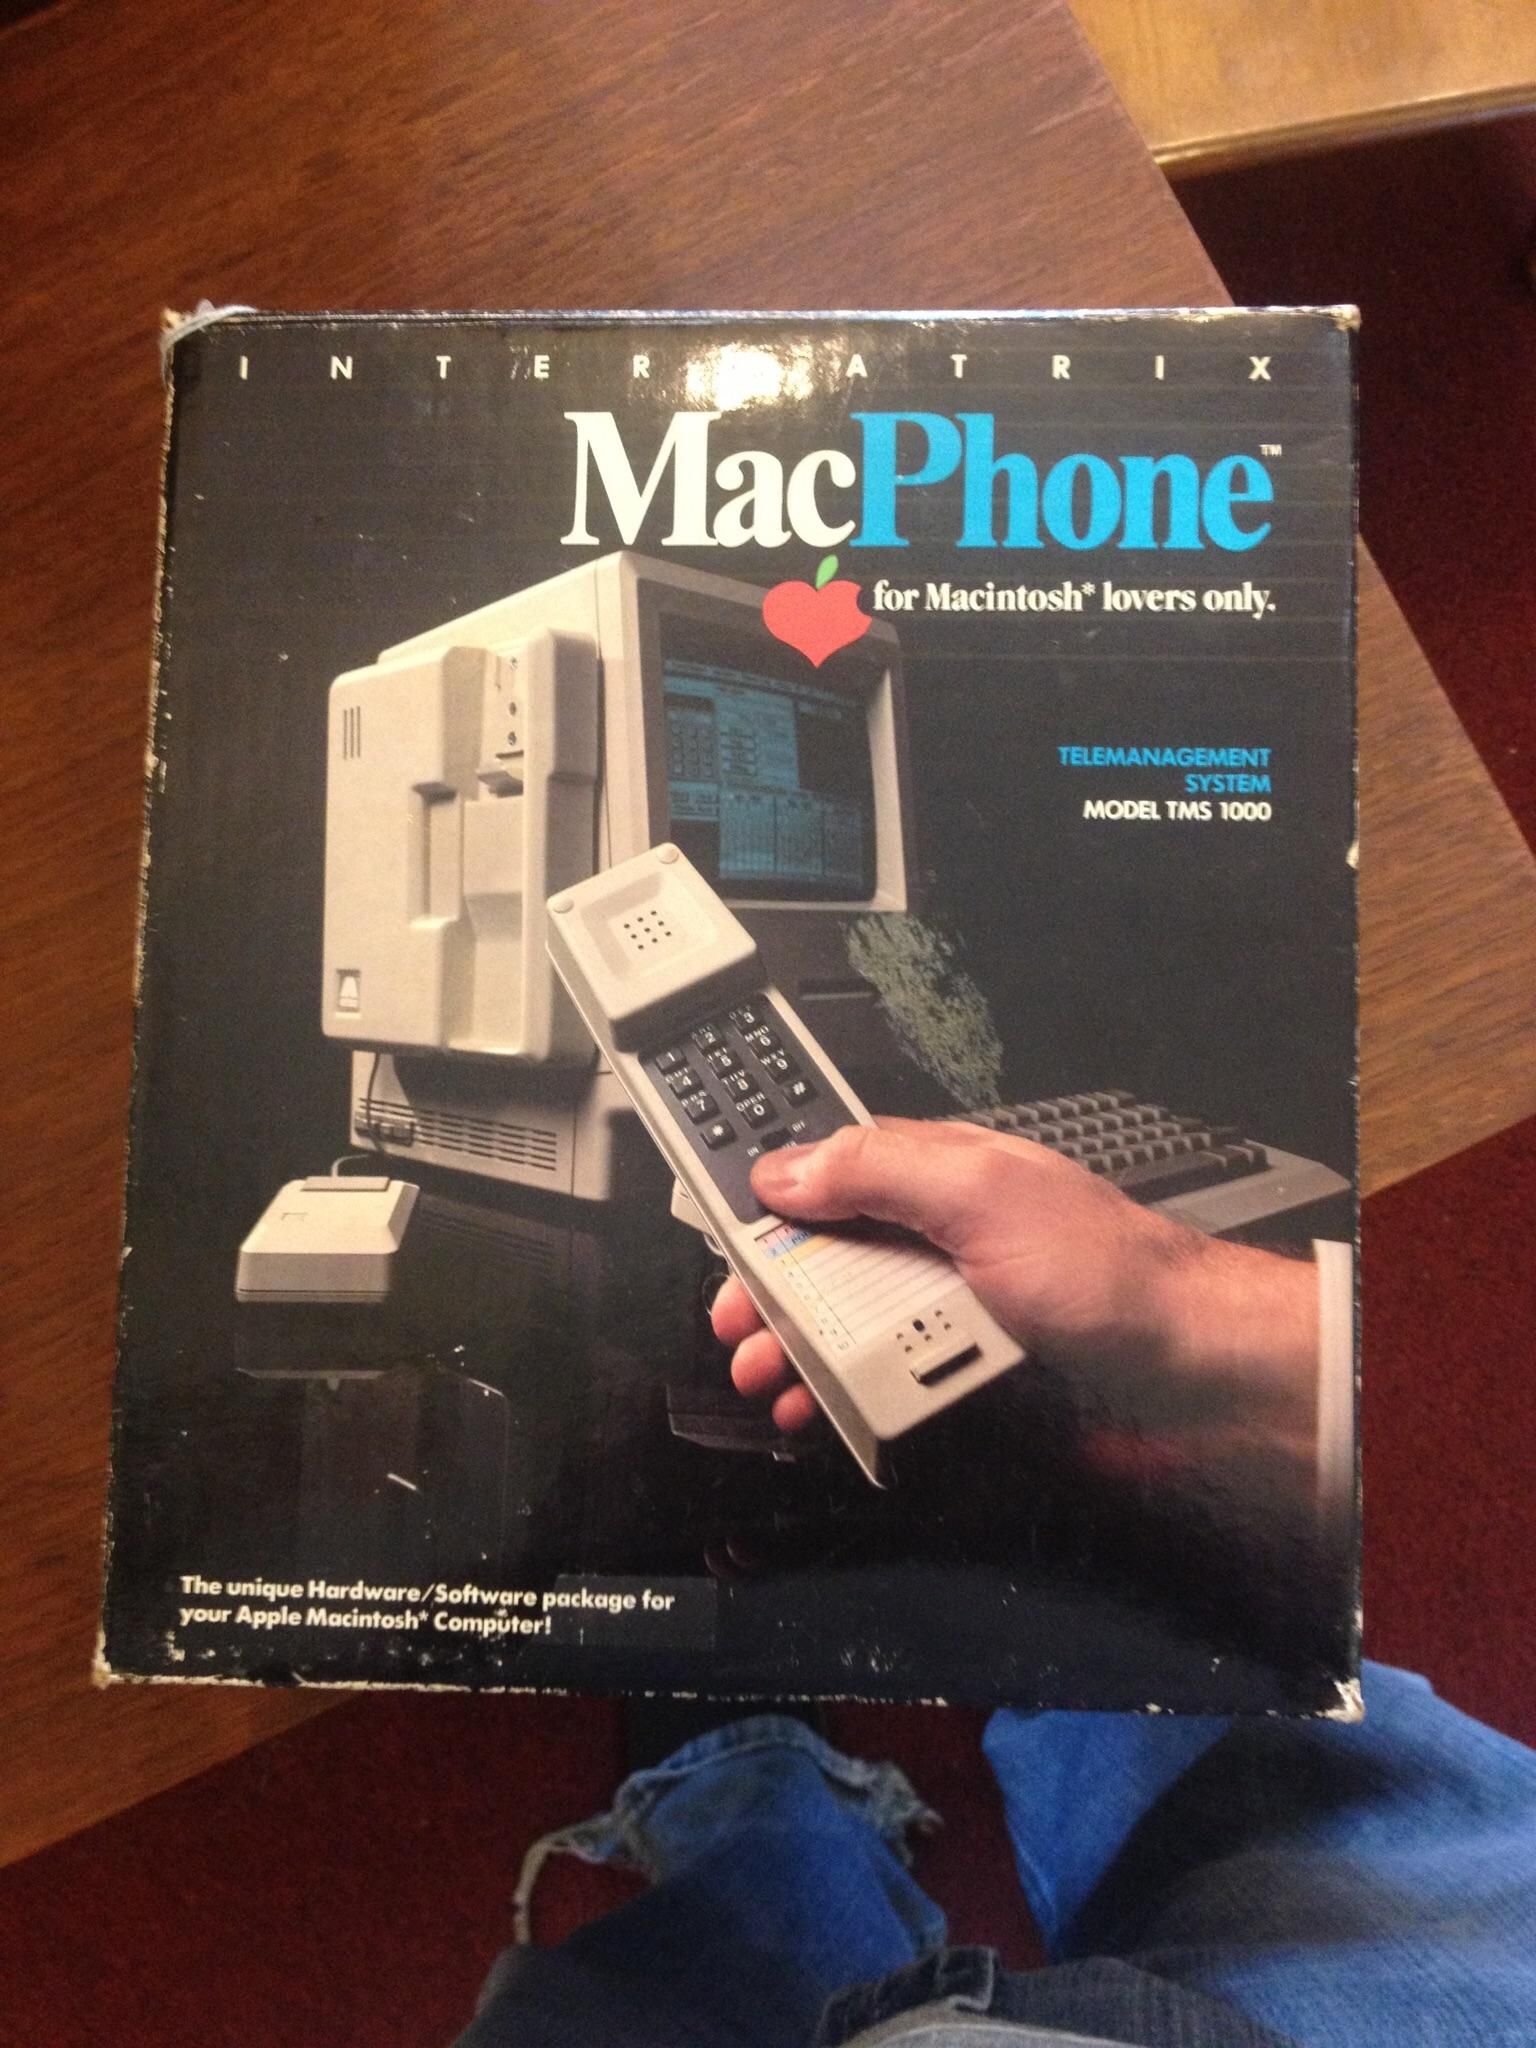 I found the original iPhone!